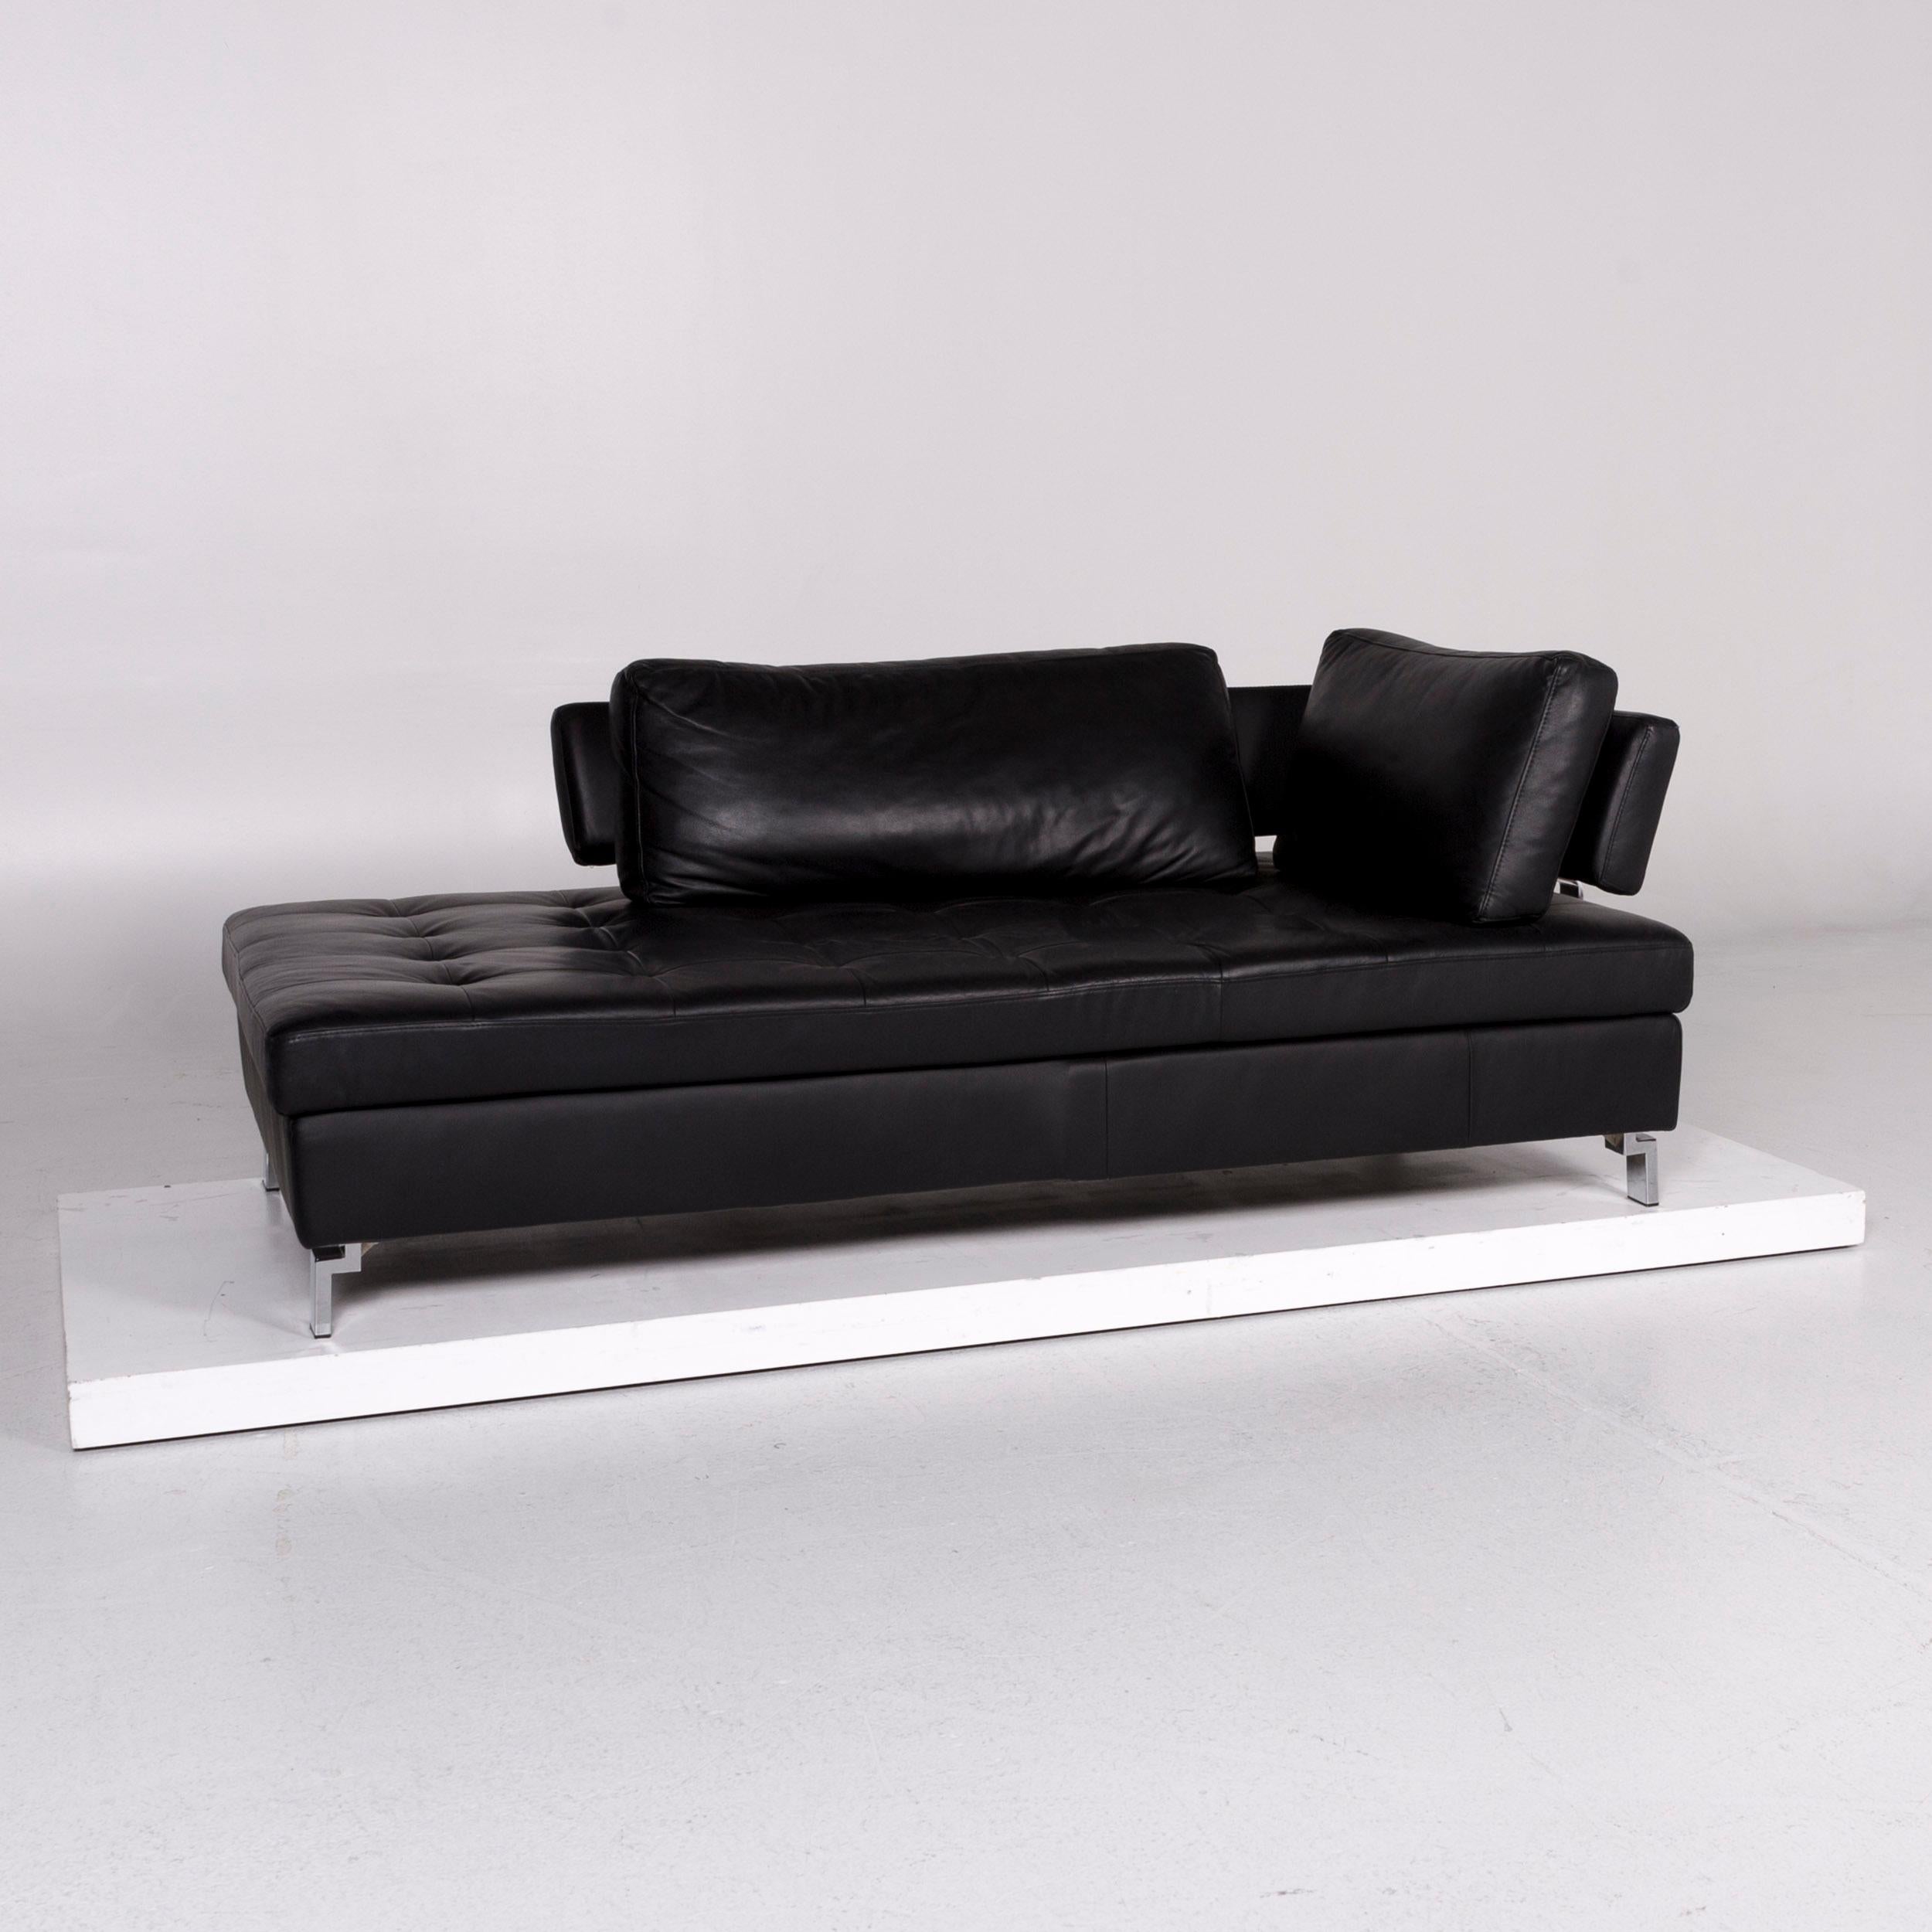 European Pattern Ring Leather Sofa Set Black 1 Three-Seat 1 Stool For Sale